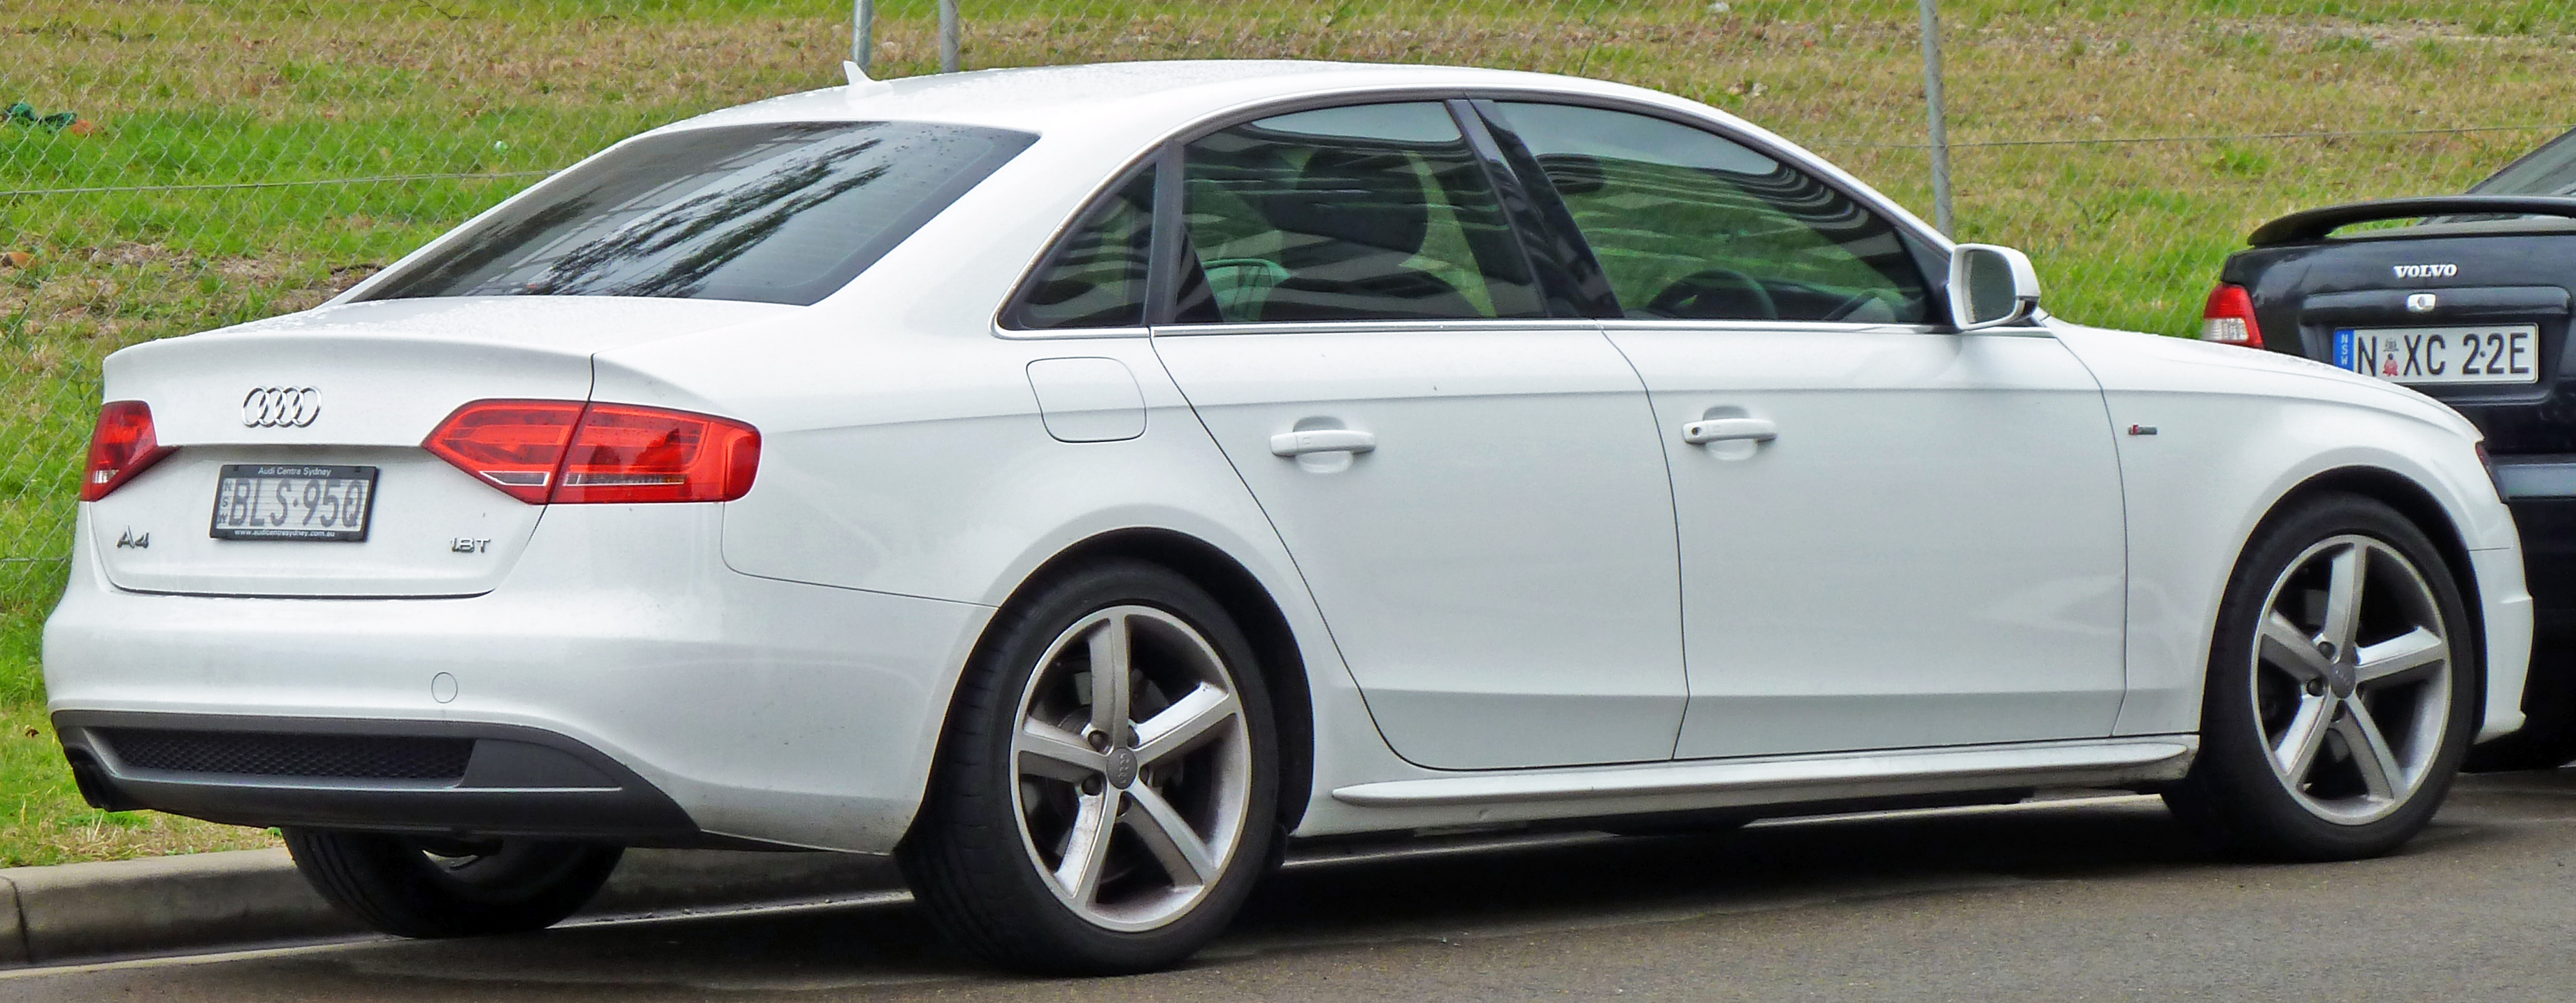 Audi A4 2010 #7